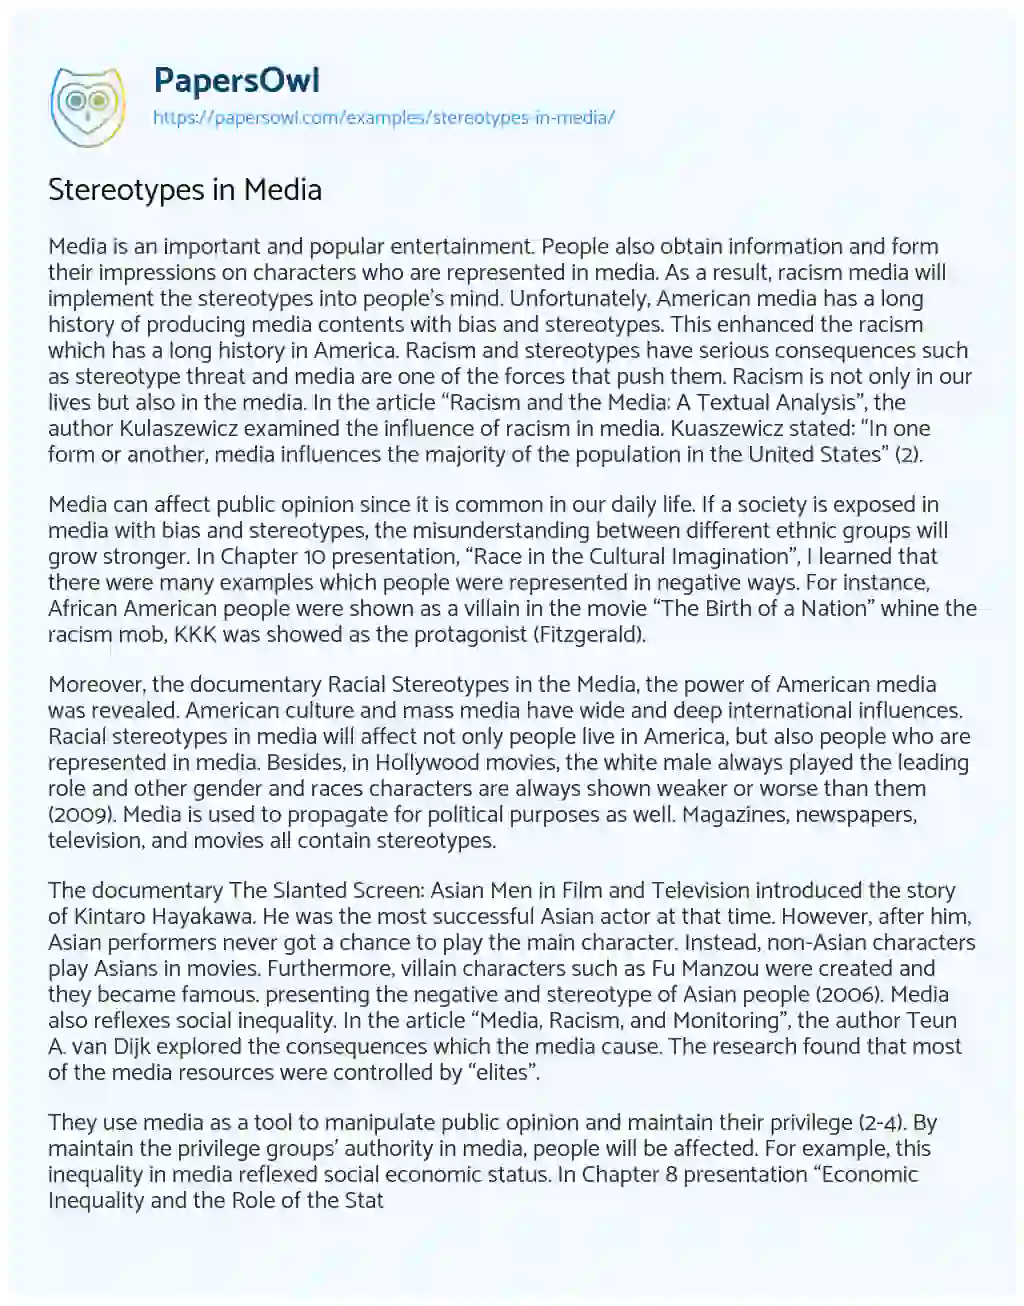 Essay on Stereotypes in Media